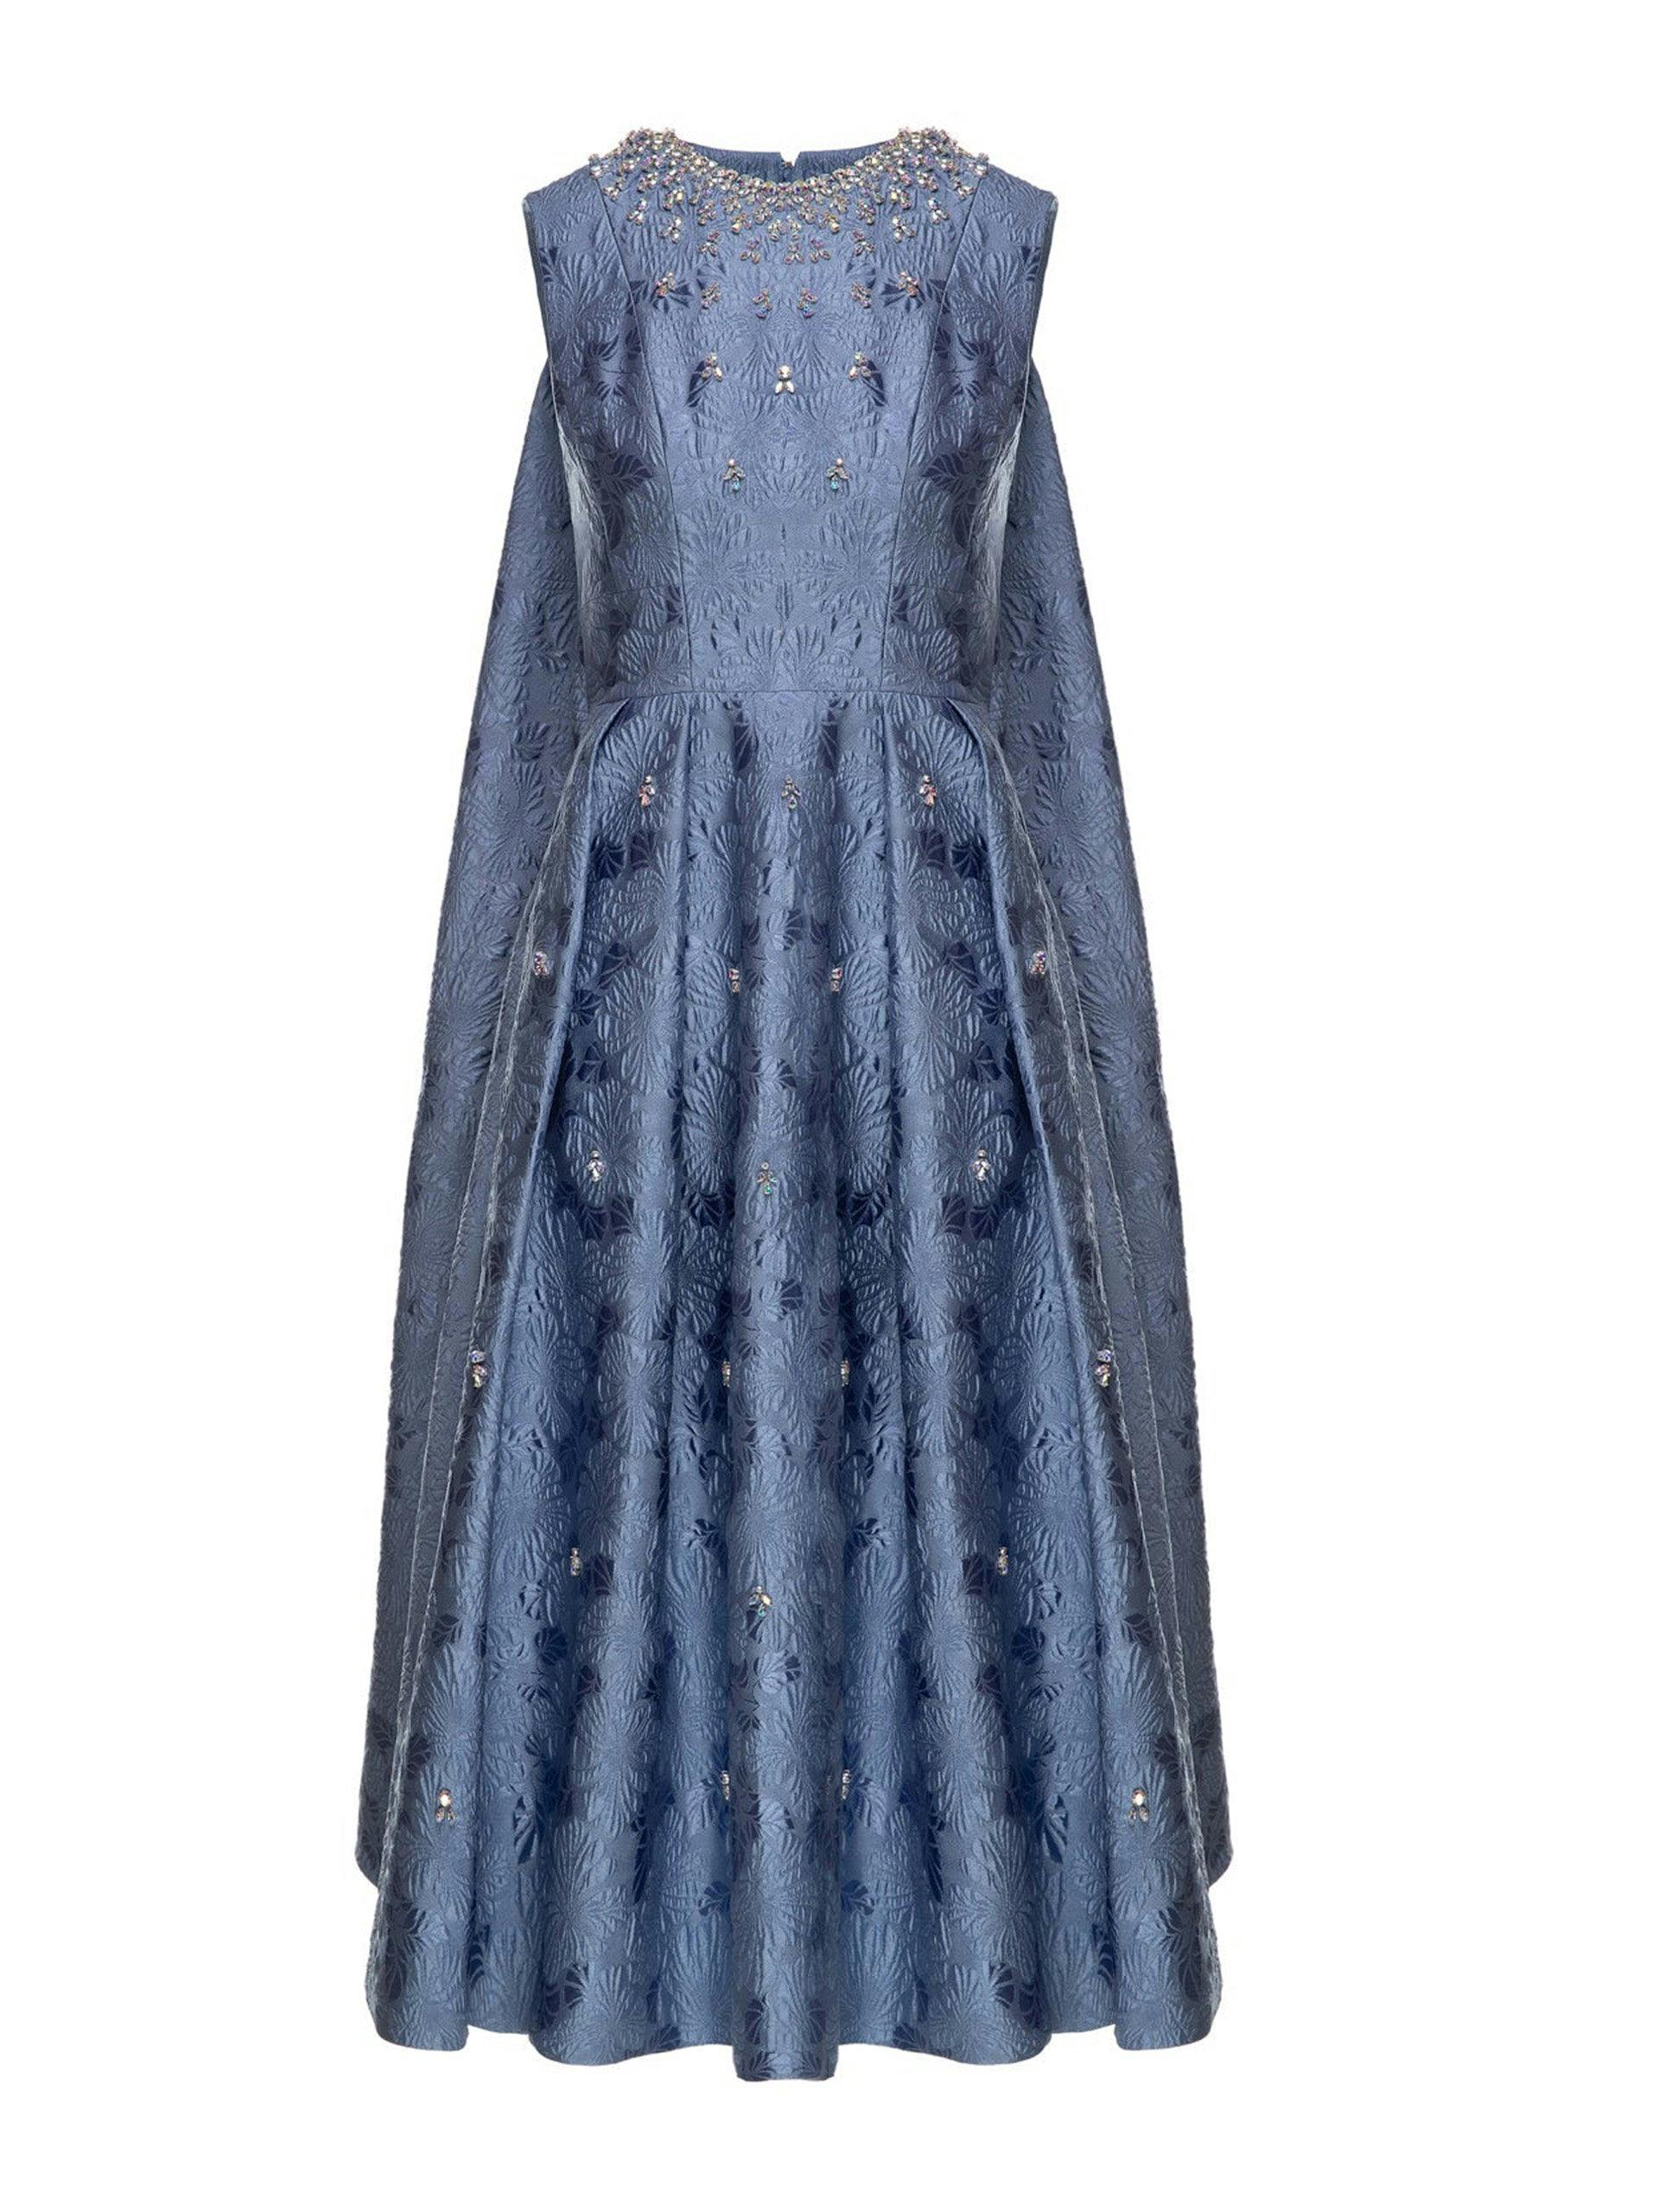 Renee cornflower blue embellished cloque dress